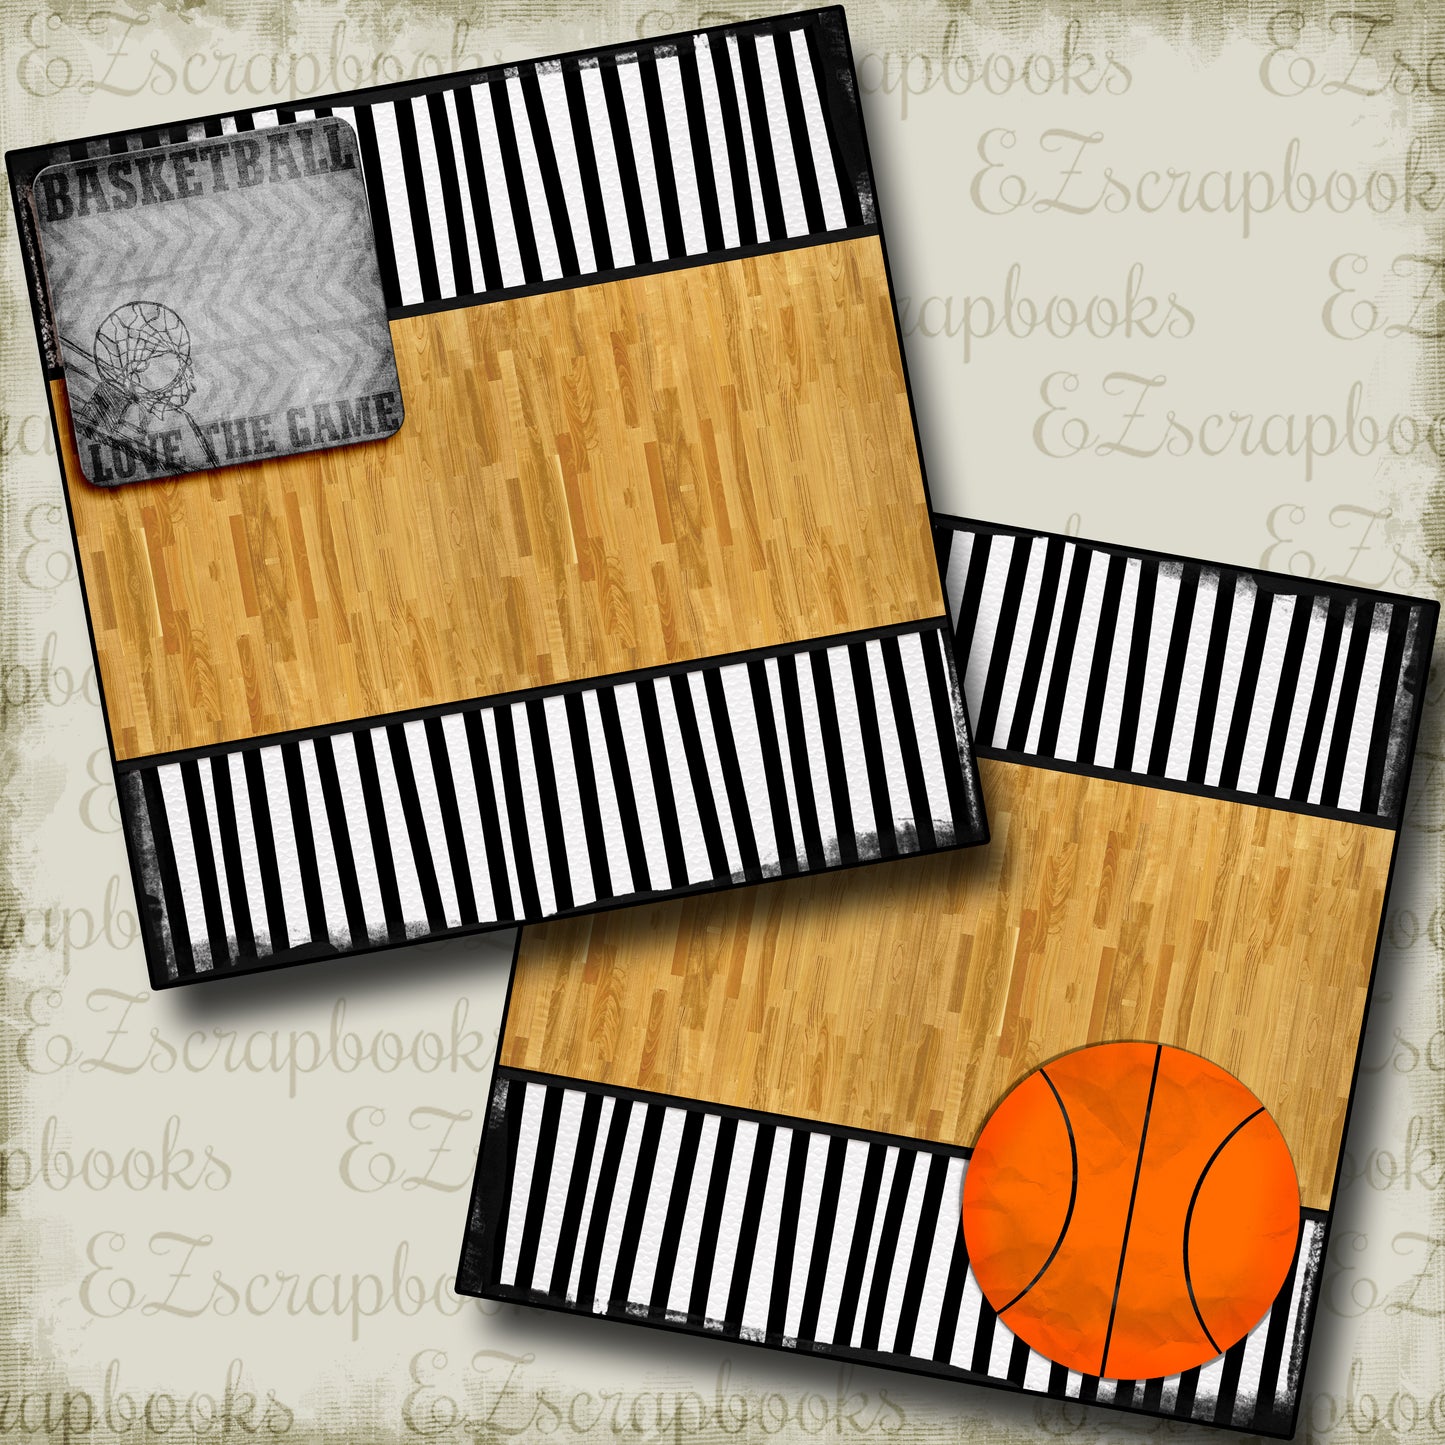 Love The Game NPM - 3695 - EZscrapbooks Scrapbook Layouts basketball, Sports